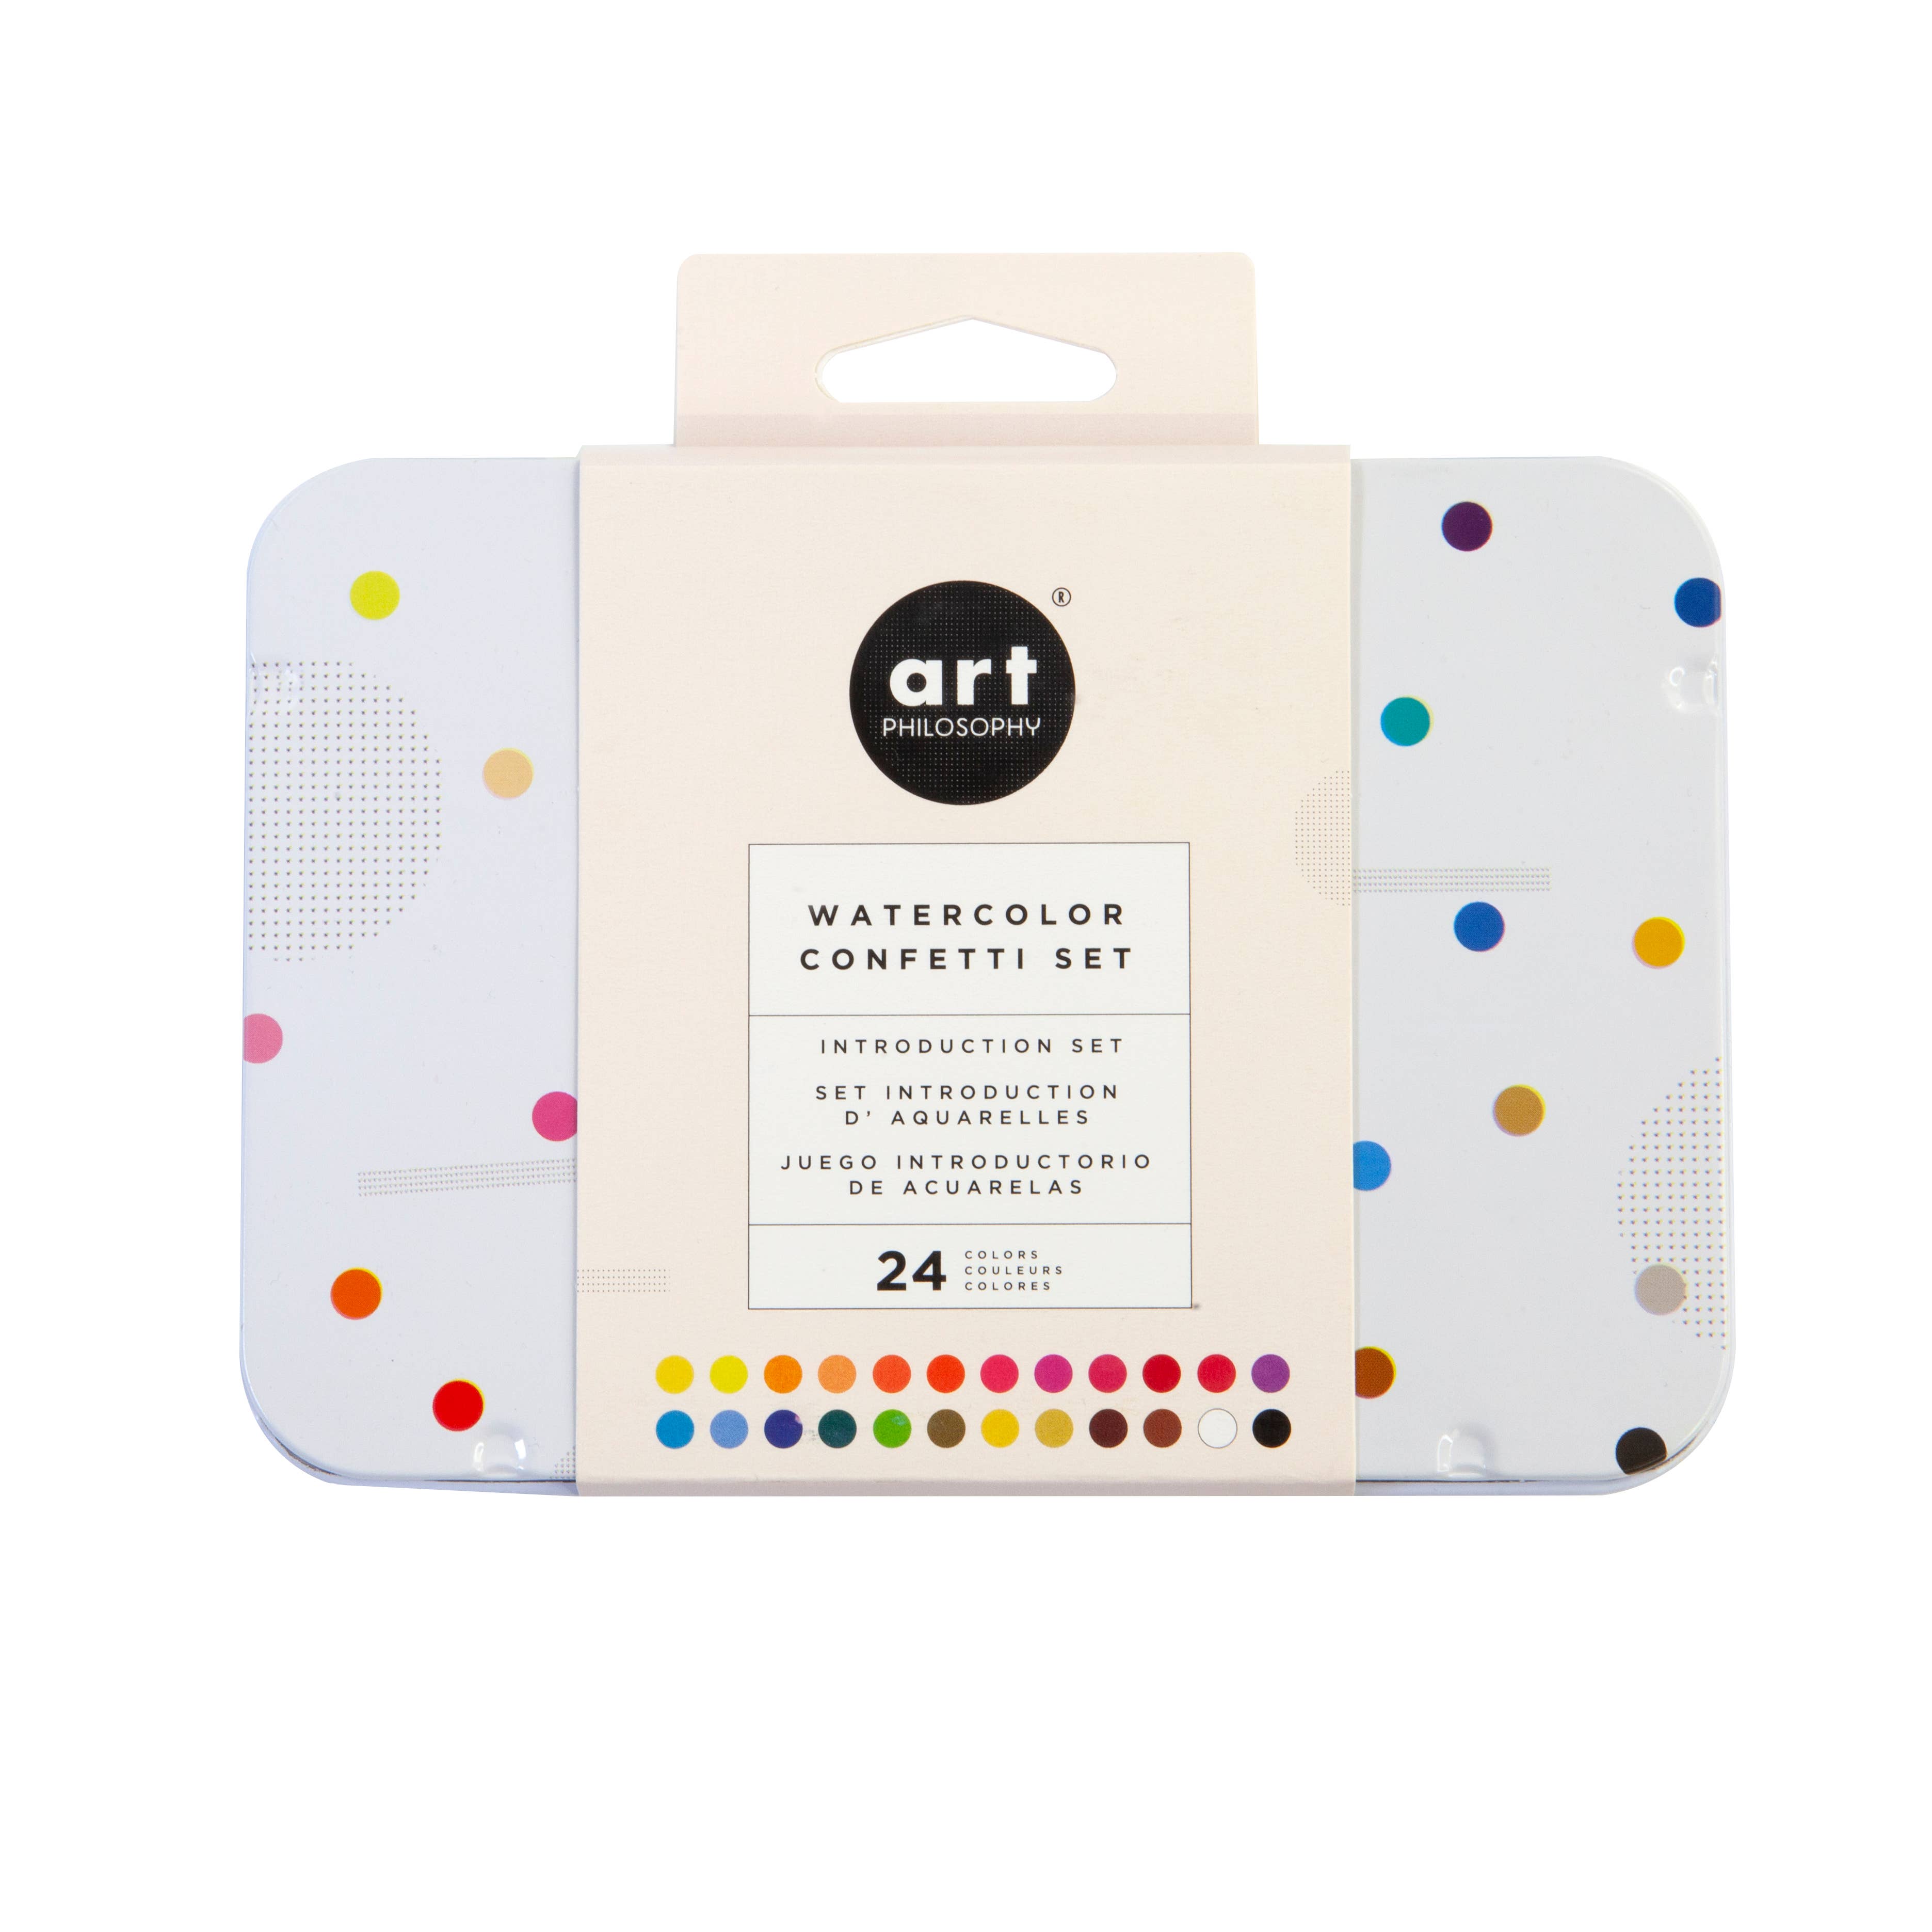 Art Philosophy - Watercolor Confetti Set